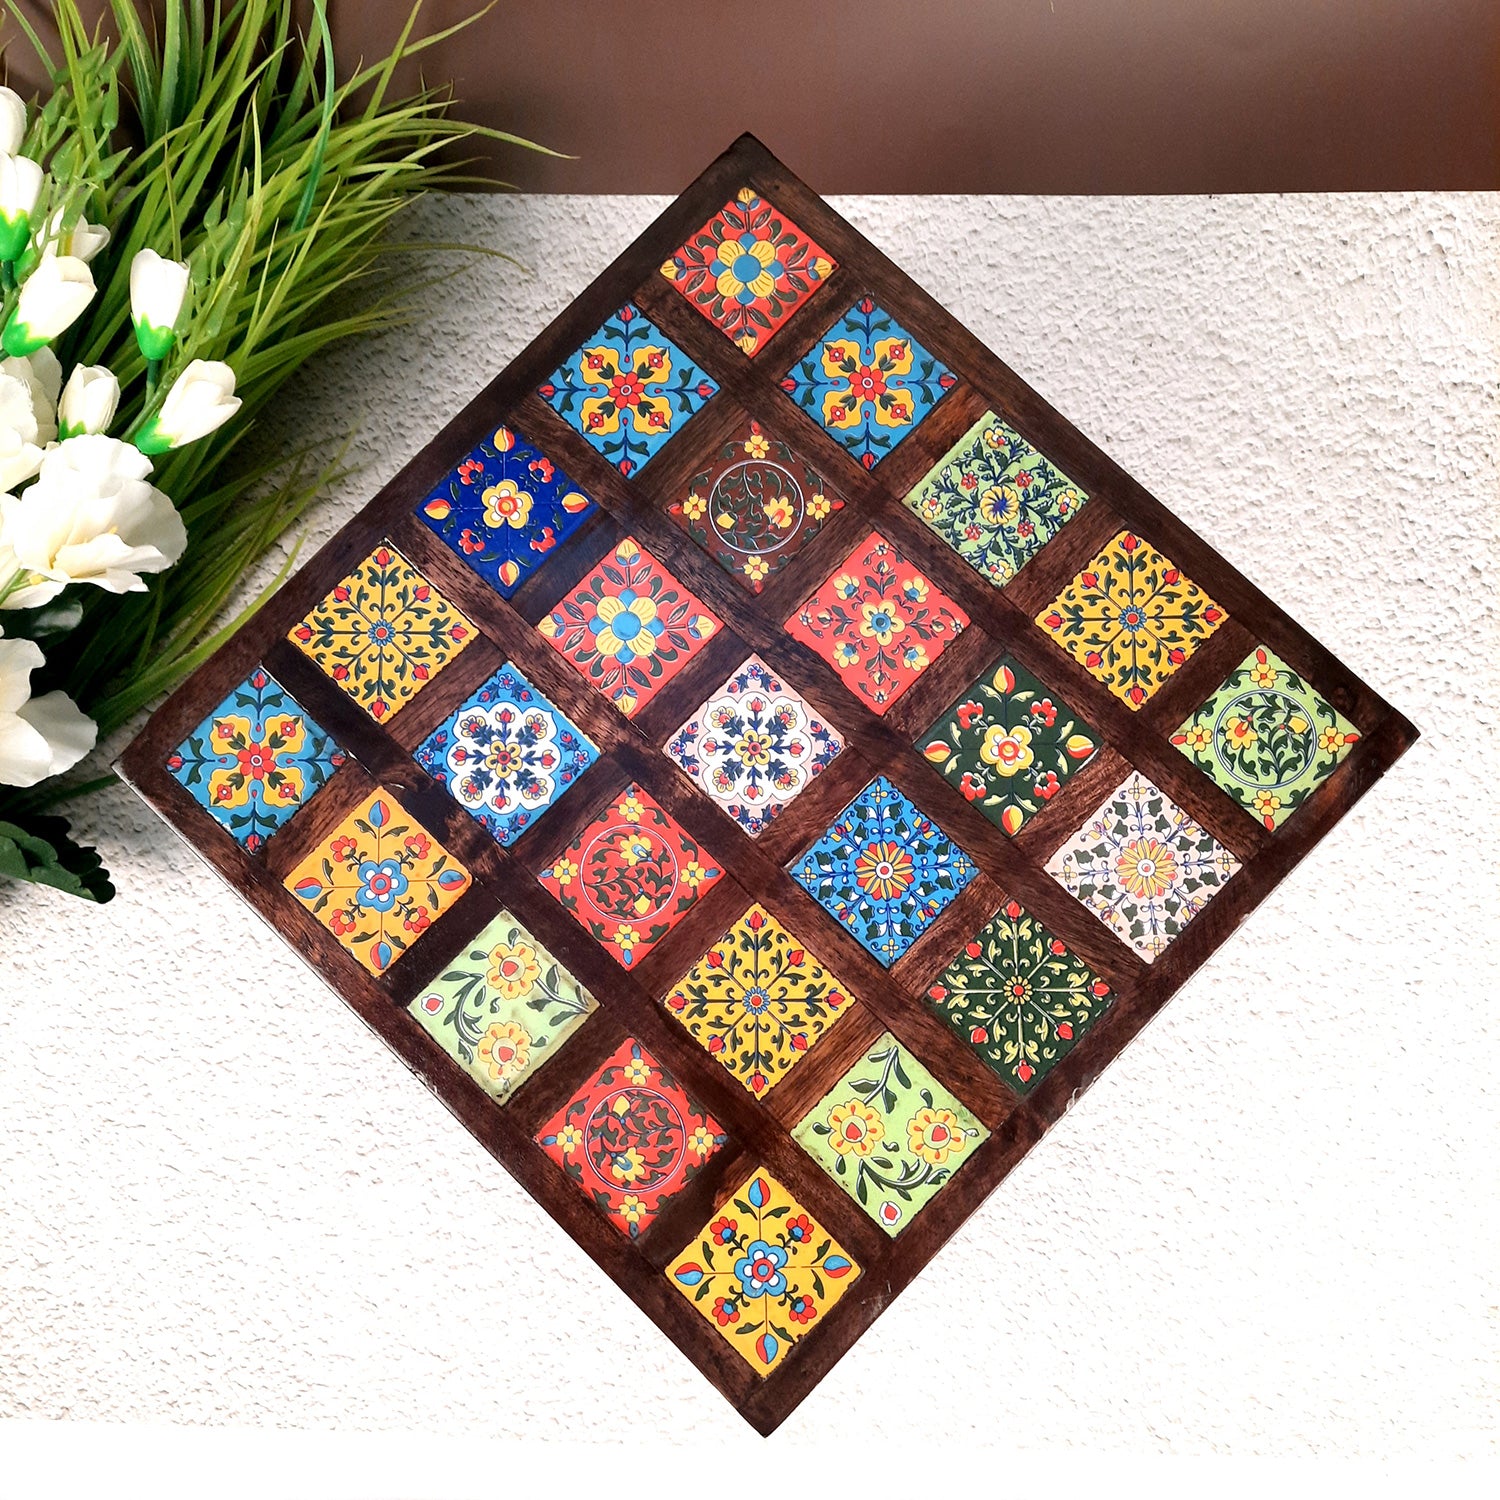 Wooden Puja Chowki with Ceramic Tile Top | Peeta / Patla - For Pooja, Weddings, Home Decor & Festivals - 13 Inches - Apkamart